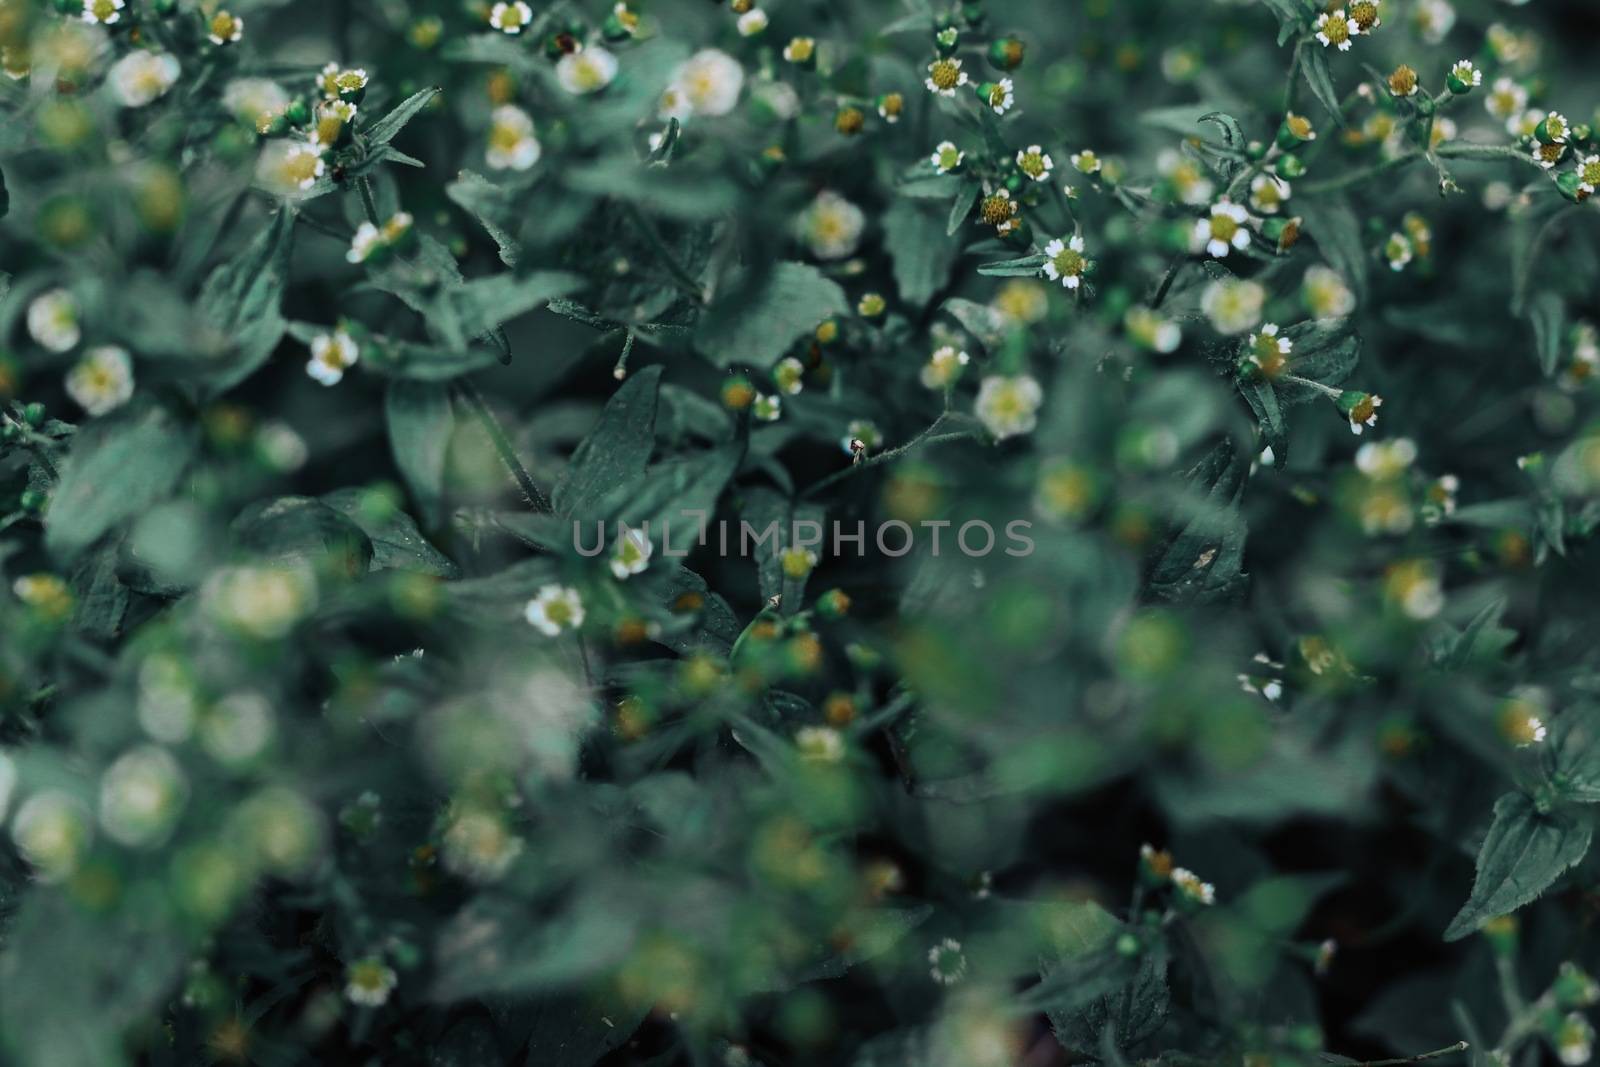 Wild flowers in nature, blurry scene